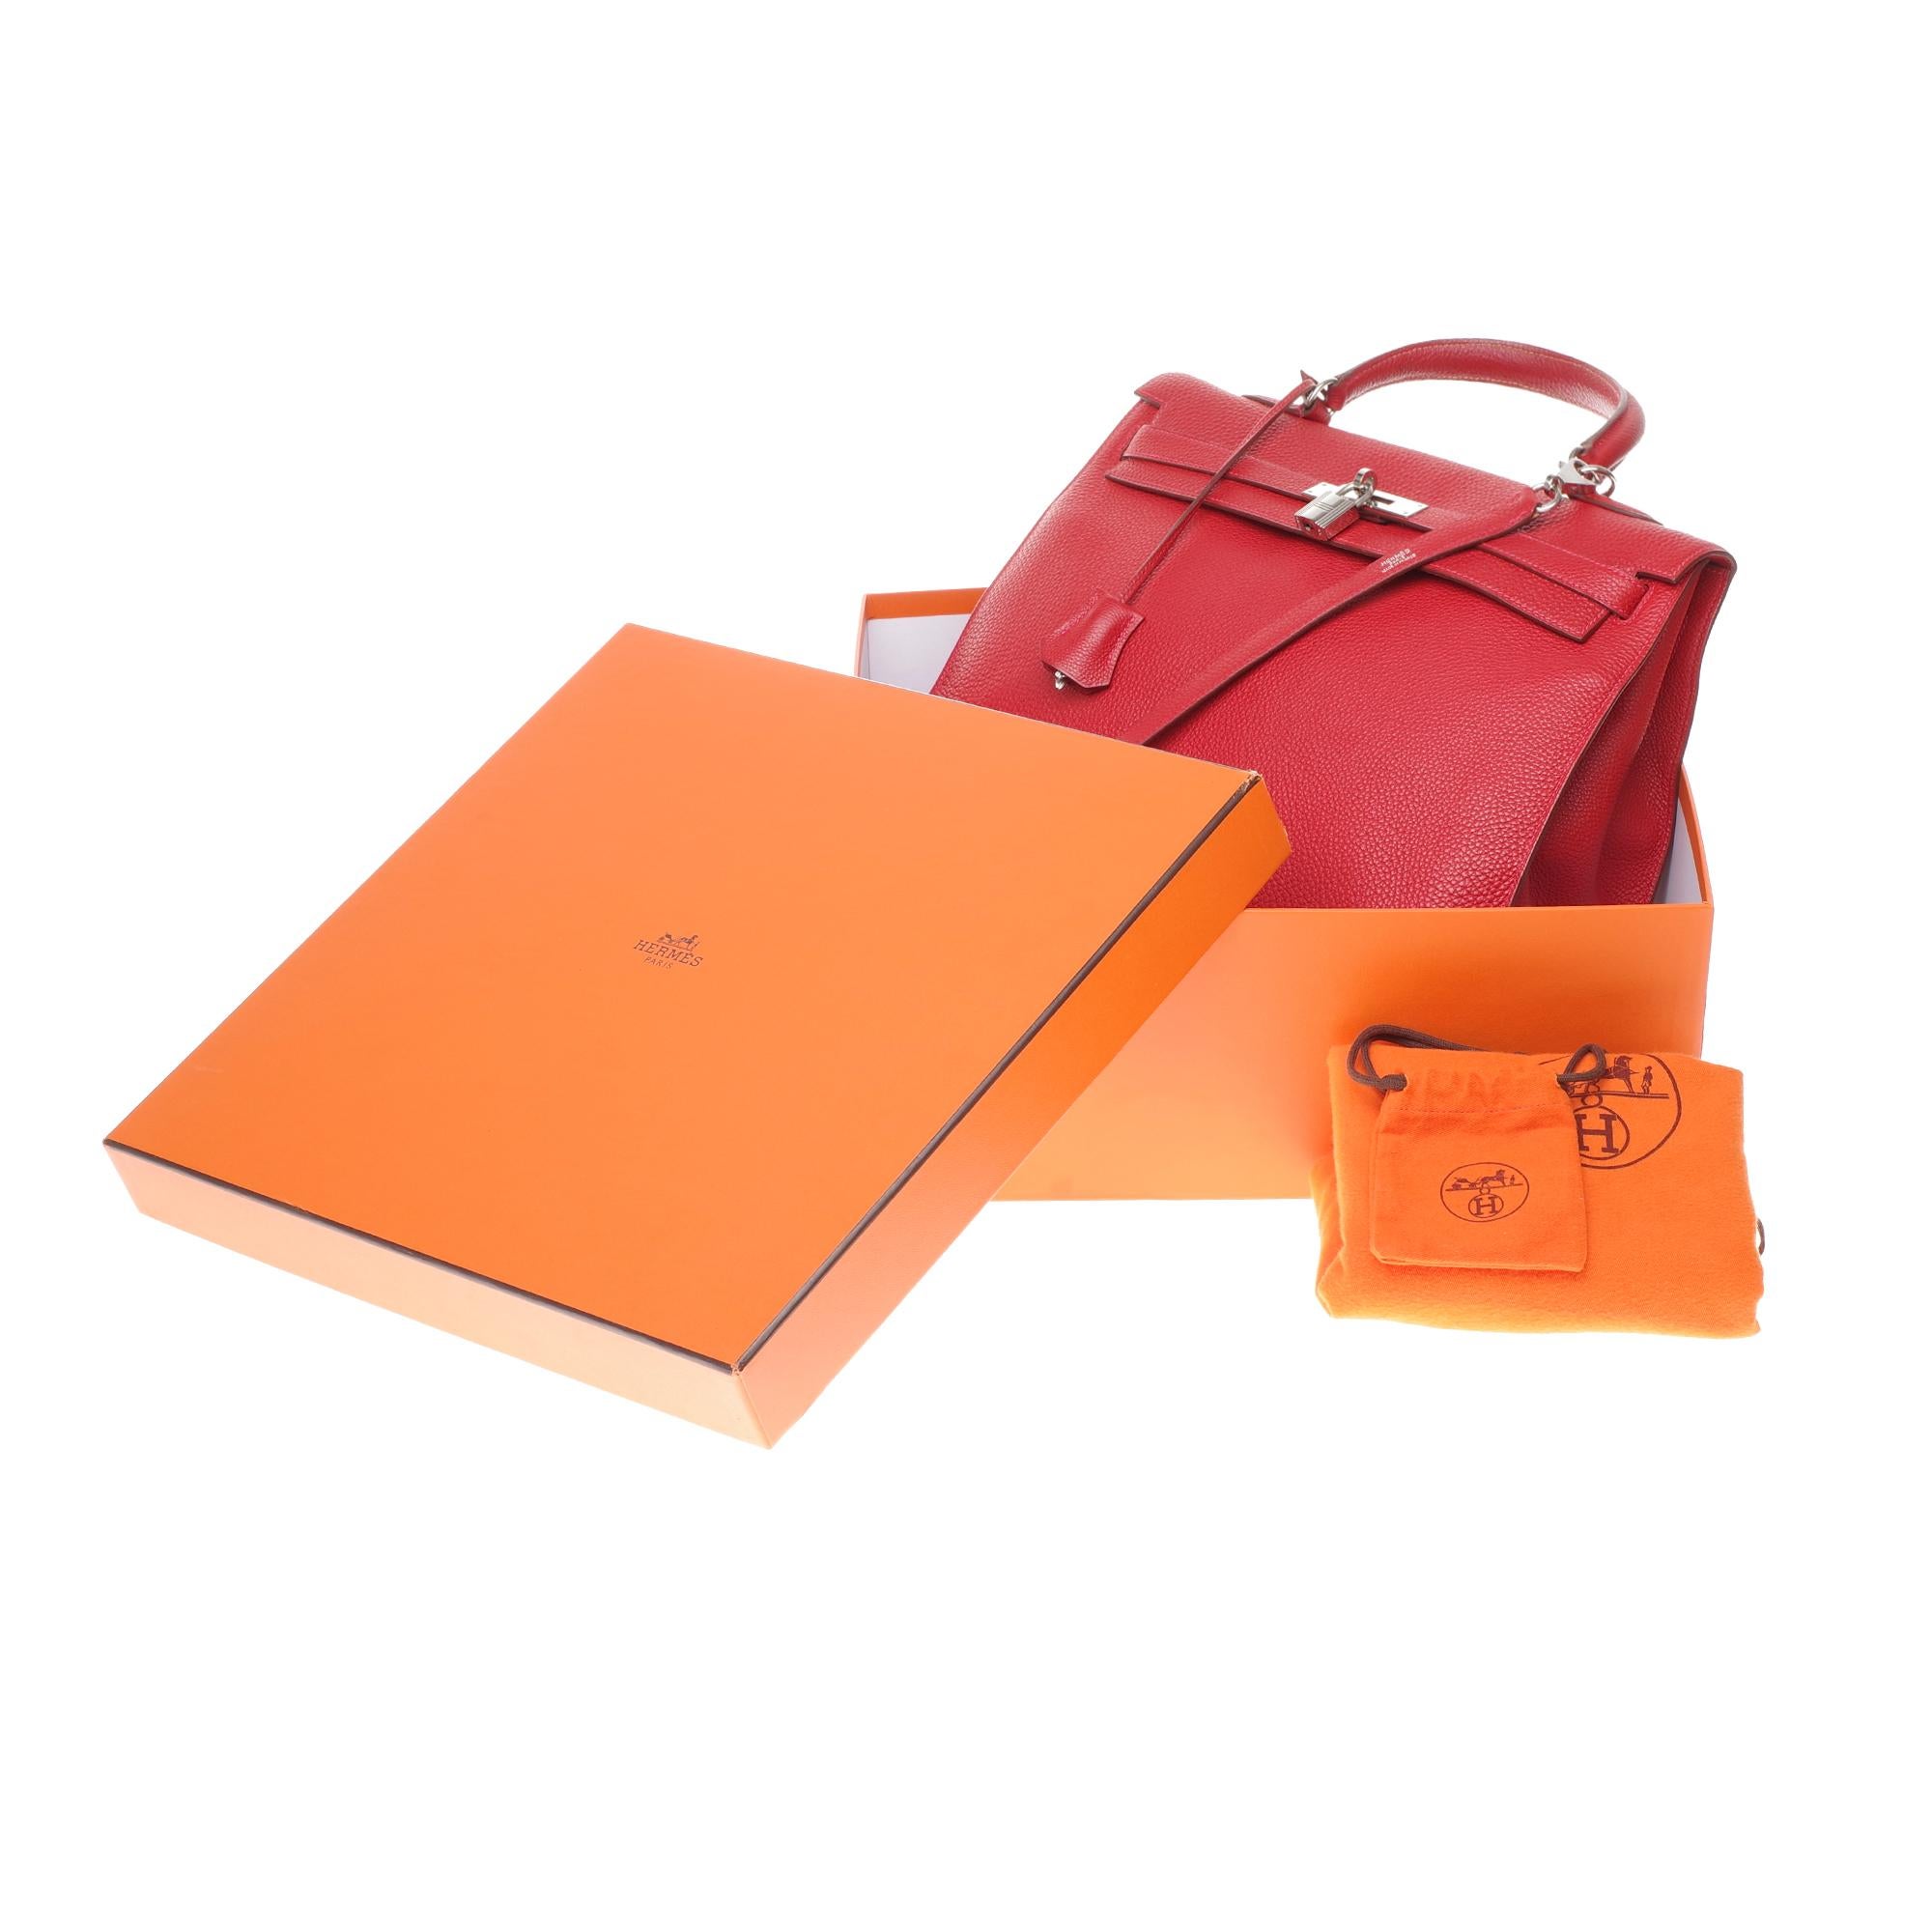 Rare Hermès Kelly 35 sellier shoulder bag in red togo leather, silver hardware 6